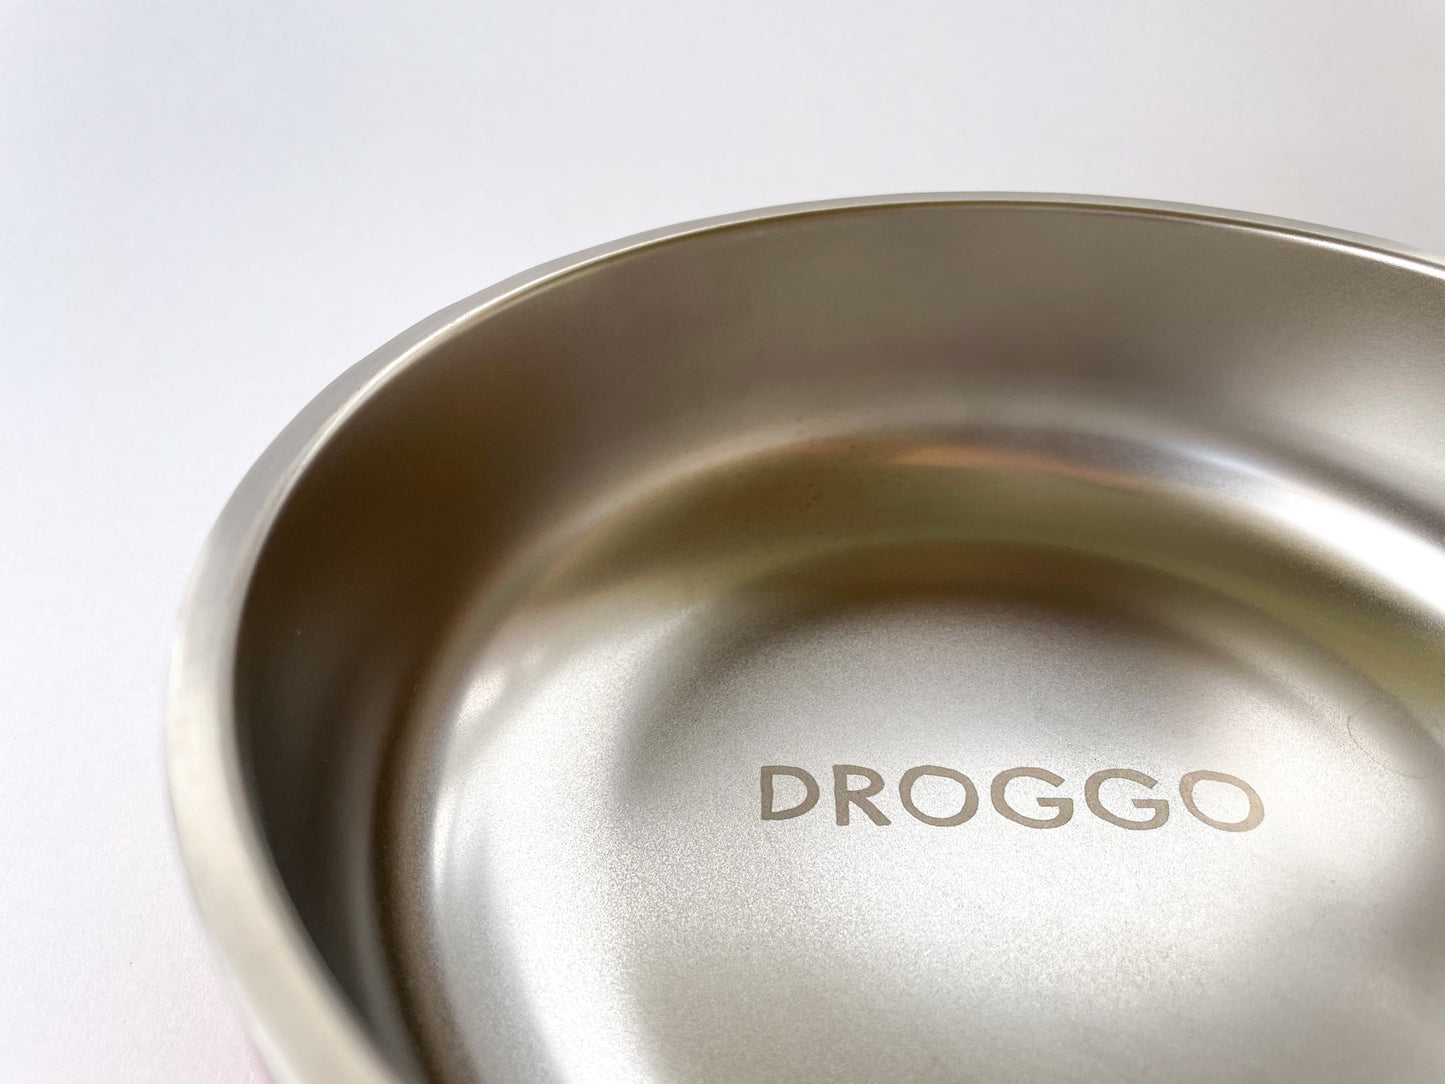 Detail of the laser engraved Droggo written logo inside the stainless steel dog water bowl. White background.